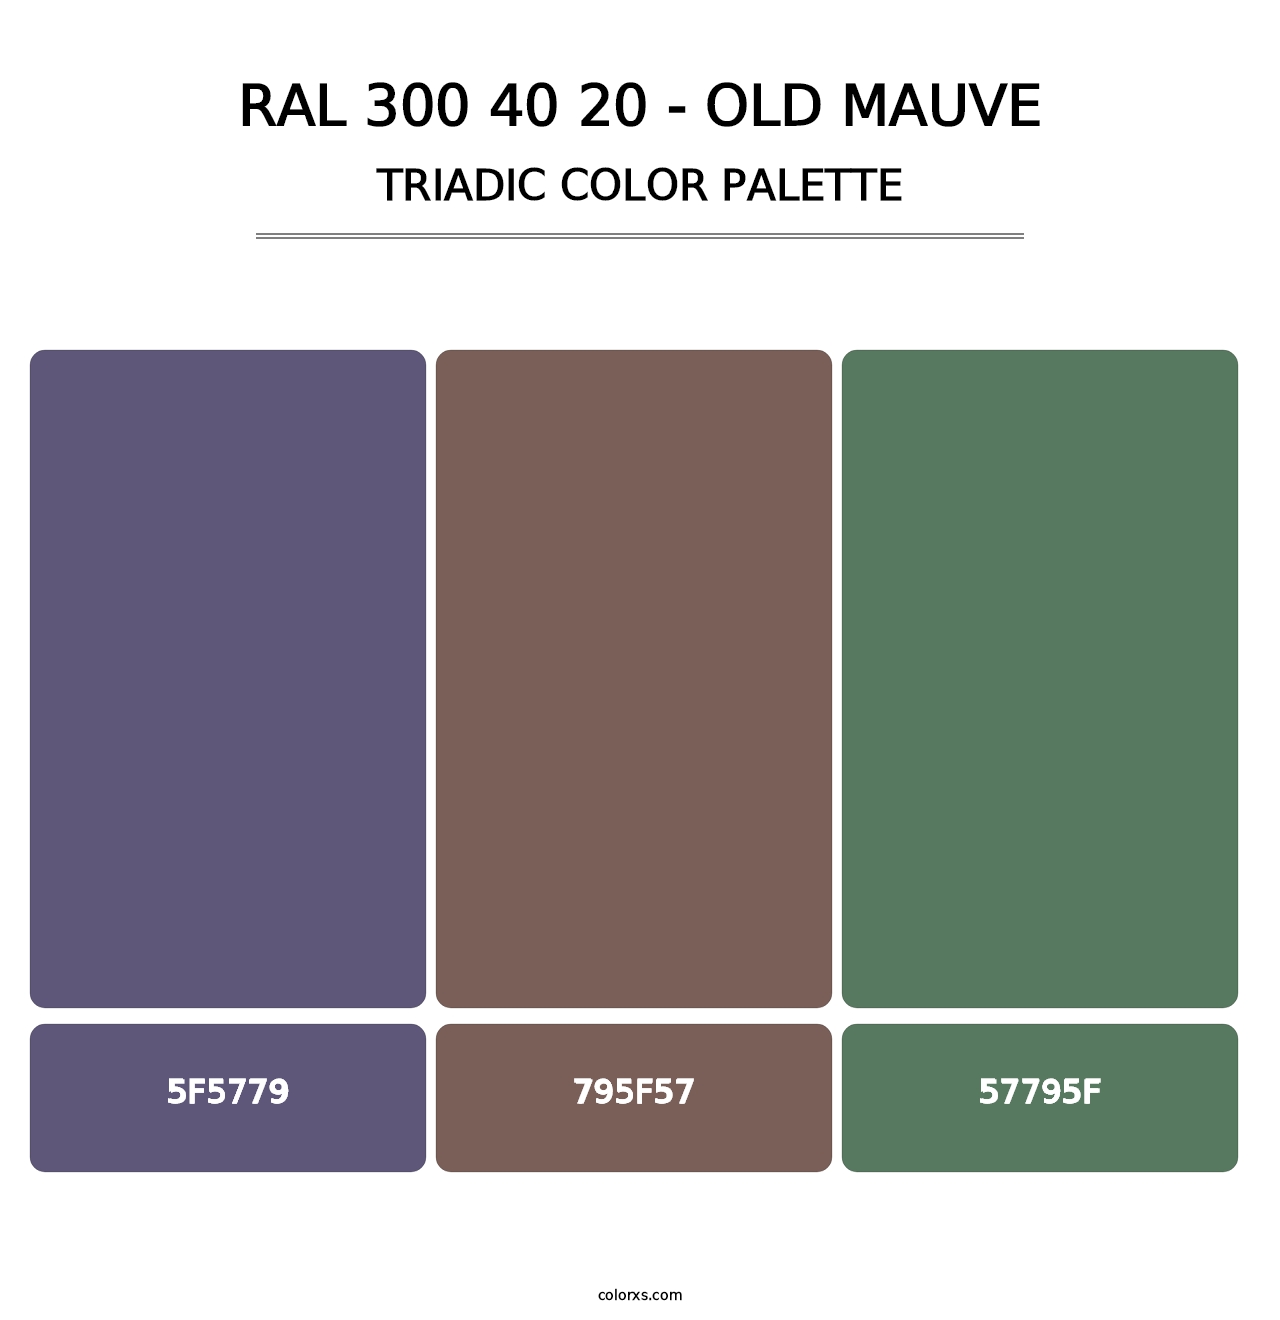 RAL 300 40 20 - Old Mauve - Triadic Color Palette